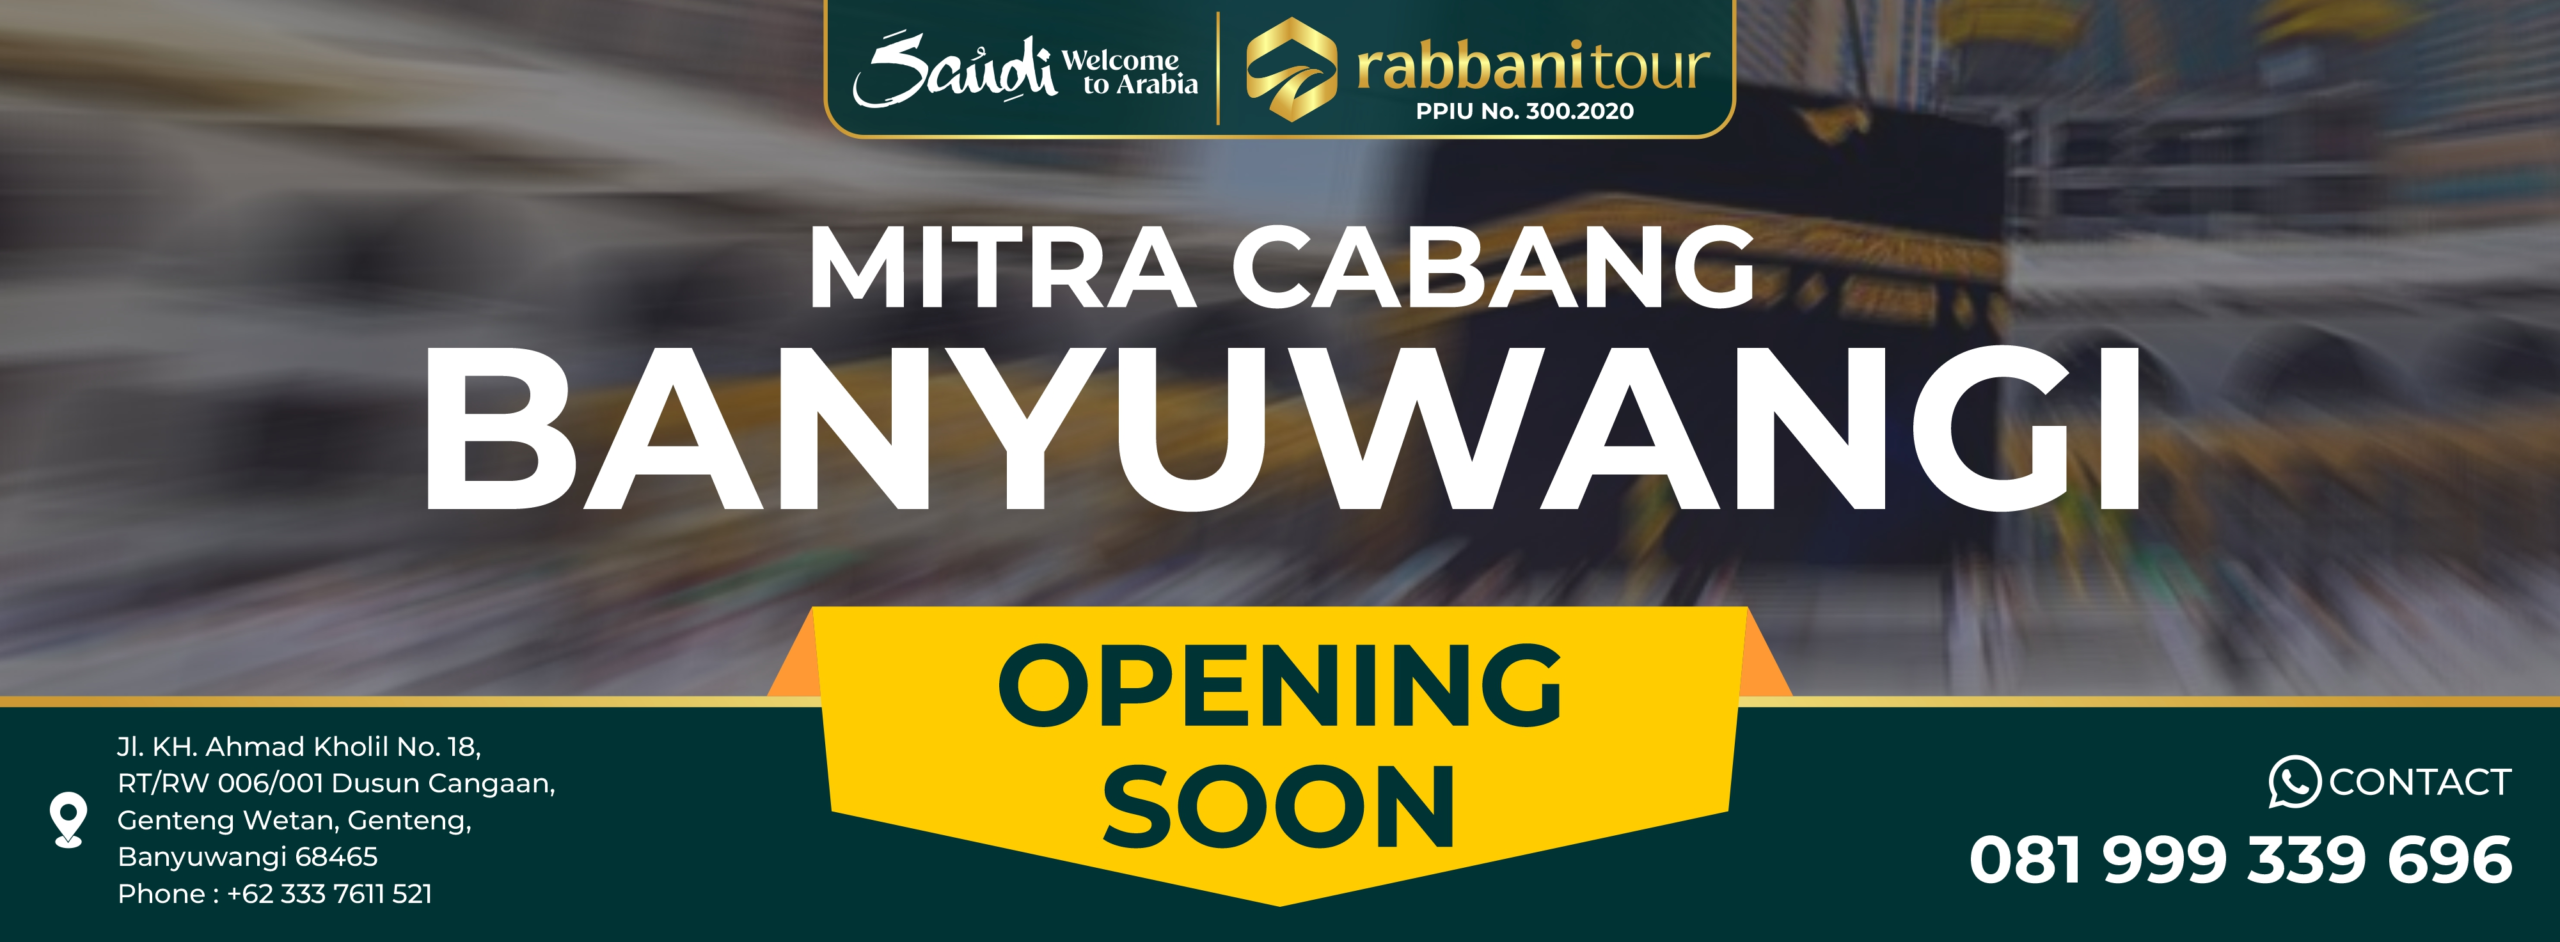 Web banner opening soon banyuwangi